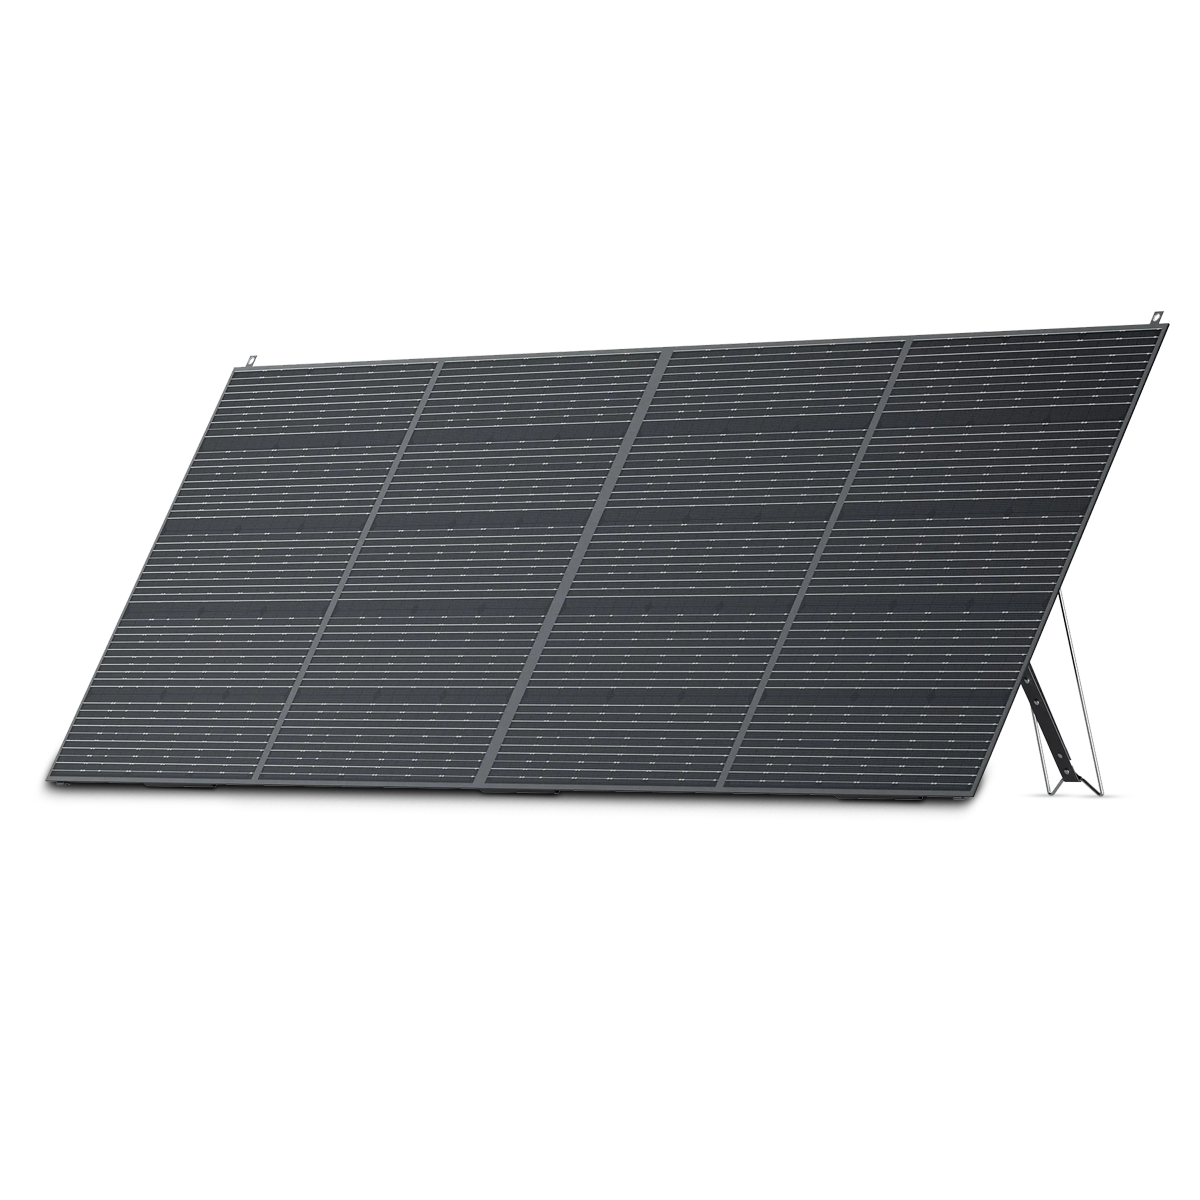 Bluetti PV420 solar panel by PSW Energy